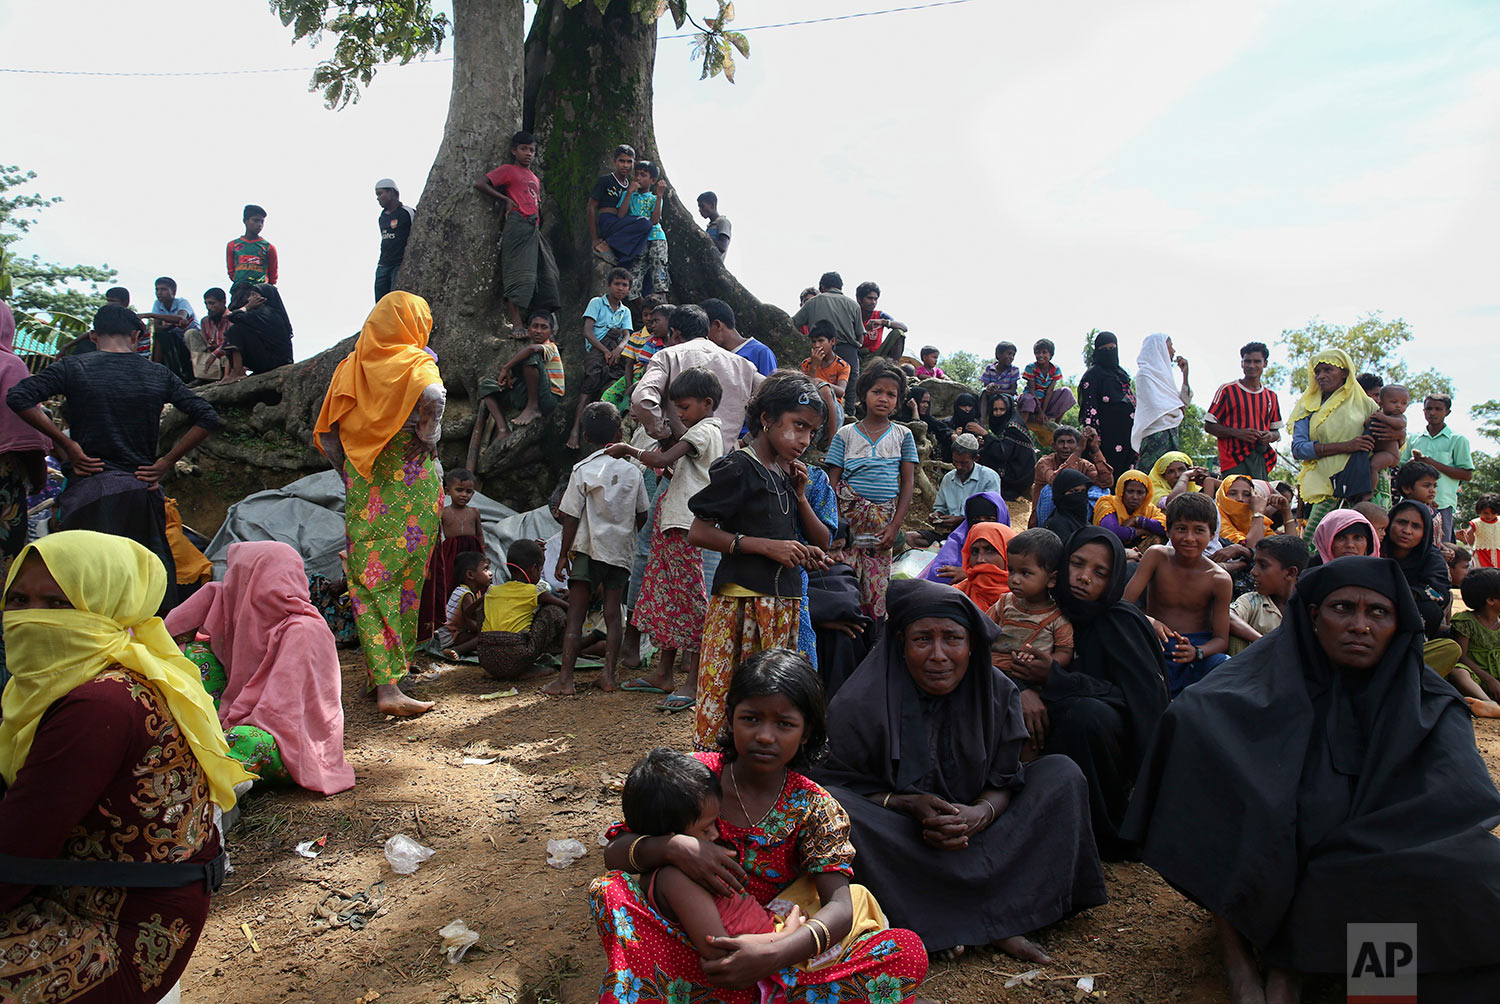  Myanmar's Rohingya Muslim ethnic minority members wait to enter the Kutupalong makeshift refugee camp in Cox's Bazar, Bangladesh, Wednesday, Aug. 30, 2017. Thousands of Rohingya Muslims have fled fresh violence in Myanmar and crossed into Bangladesh